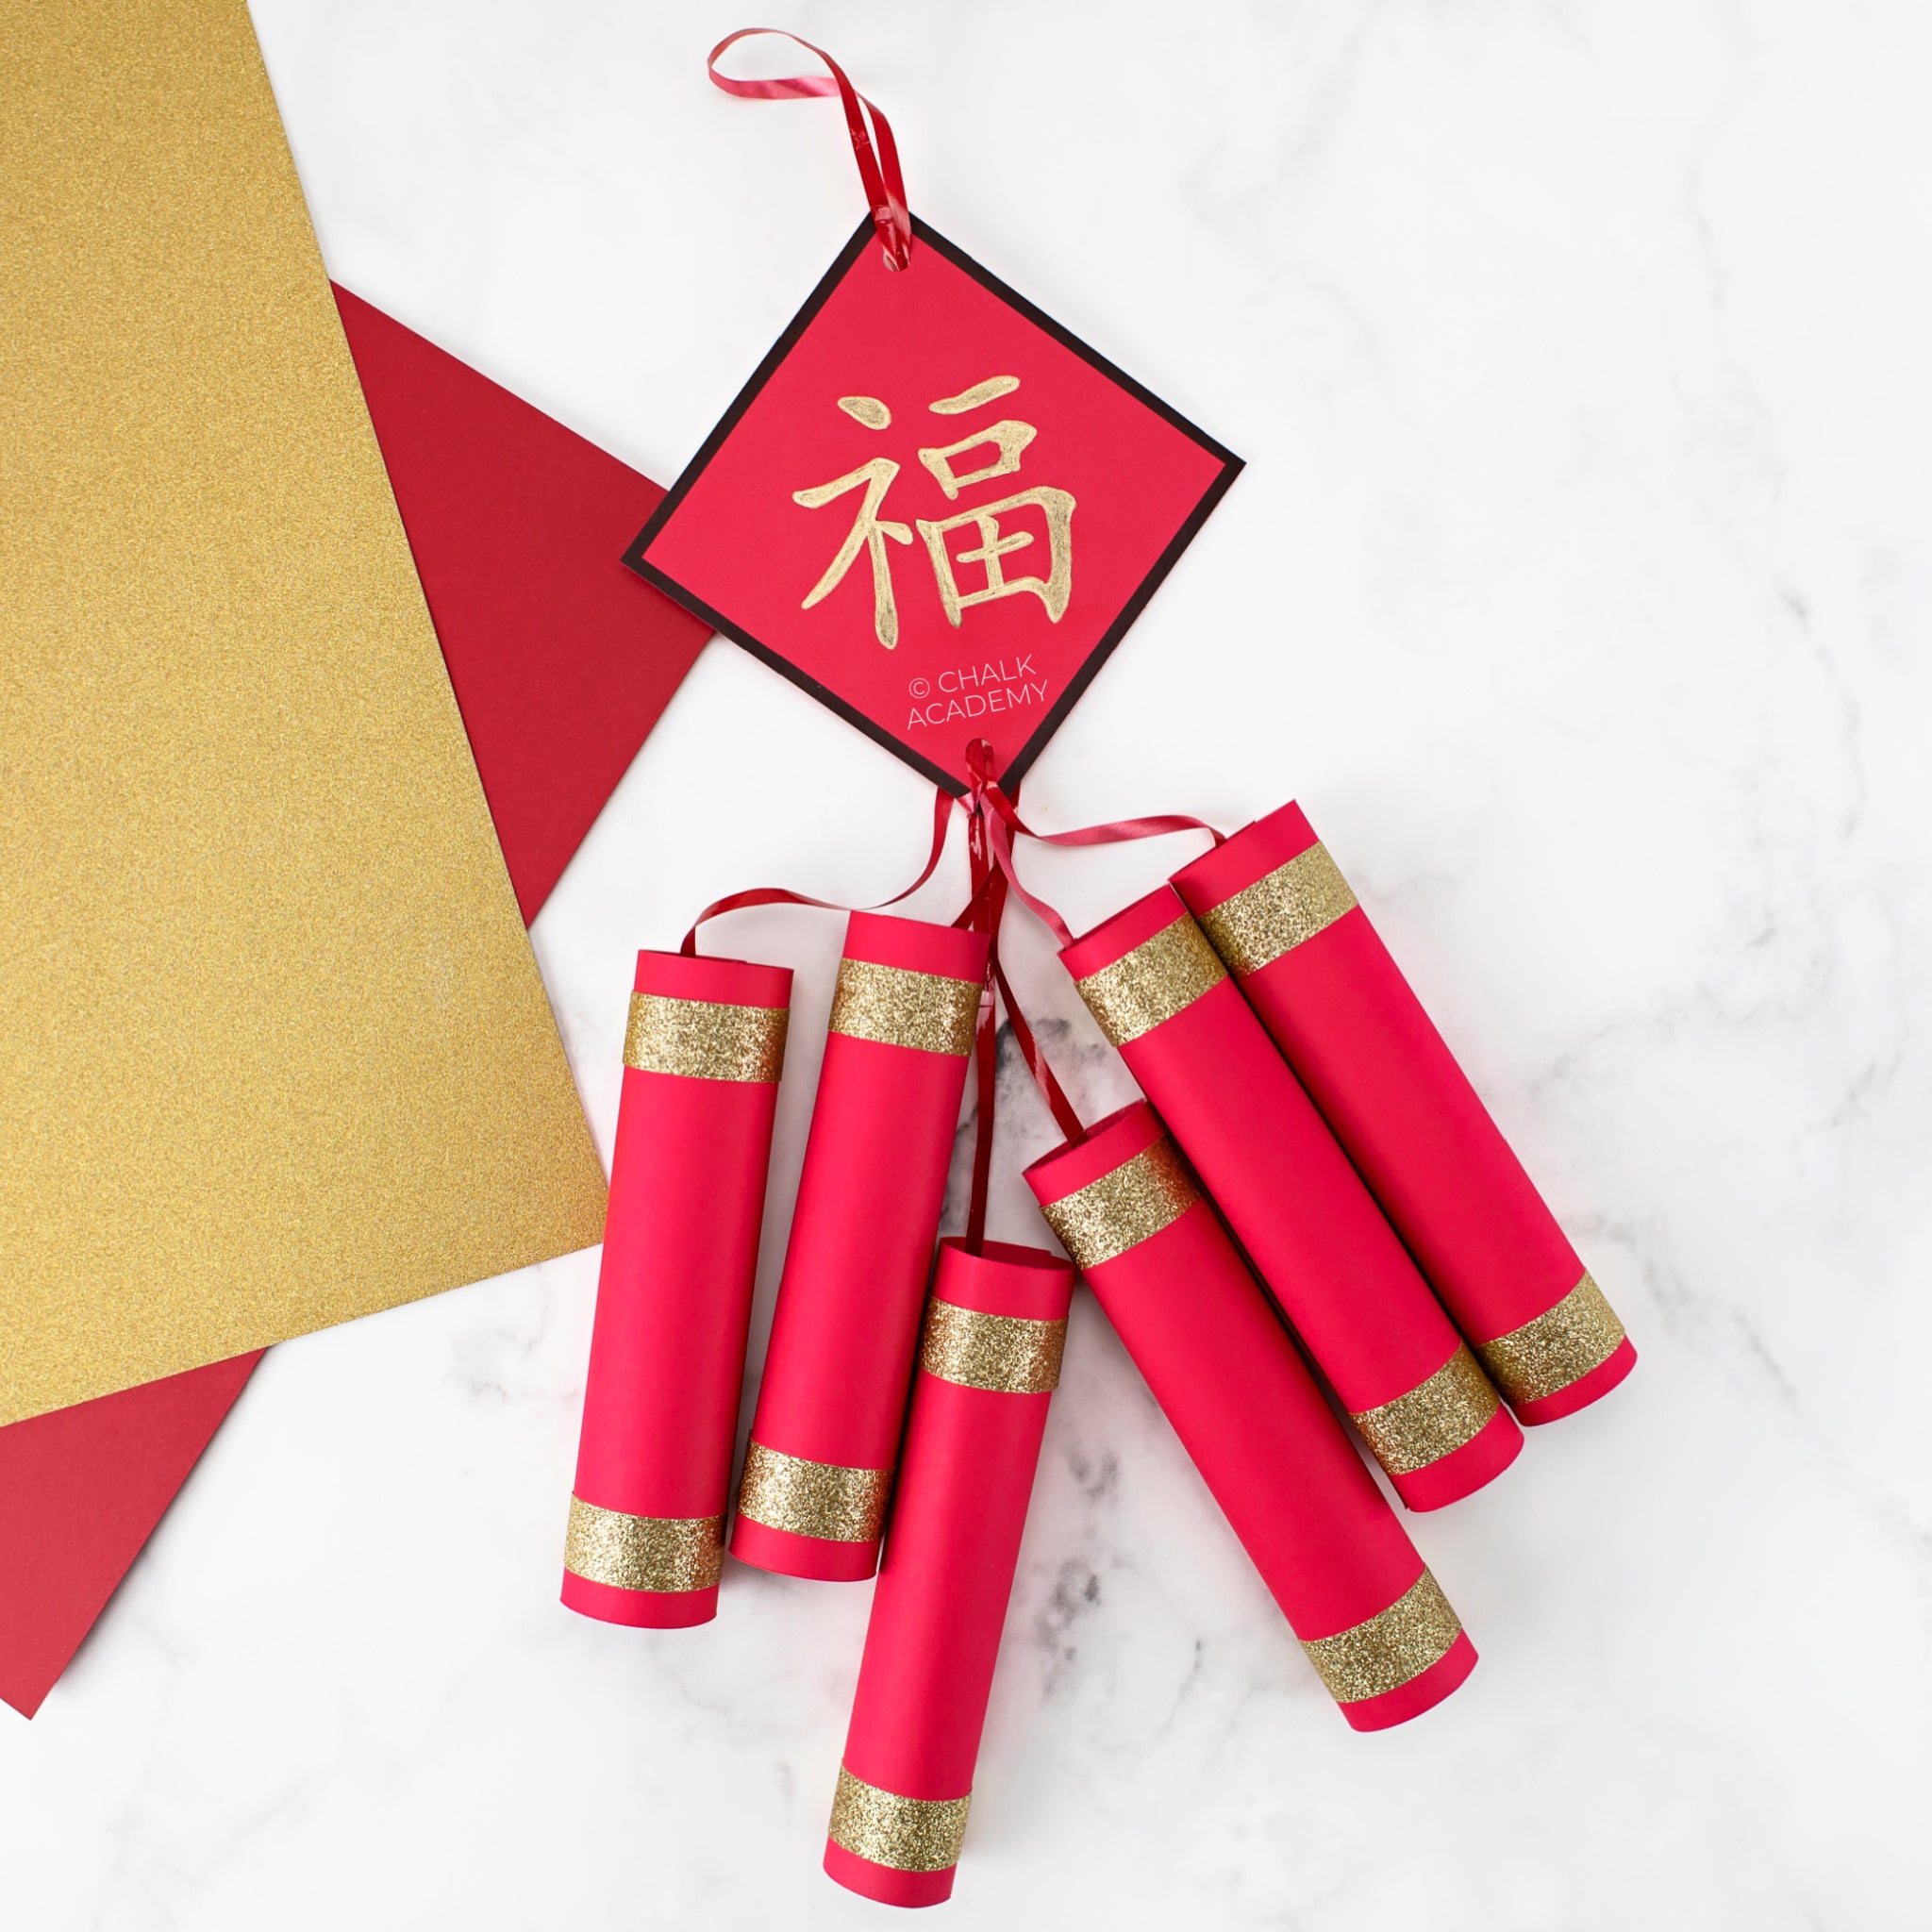 Chinese New Year Firecrackers